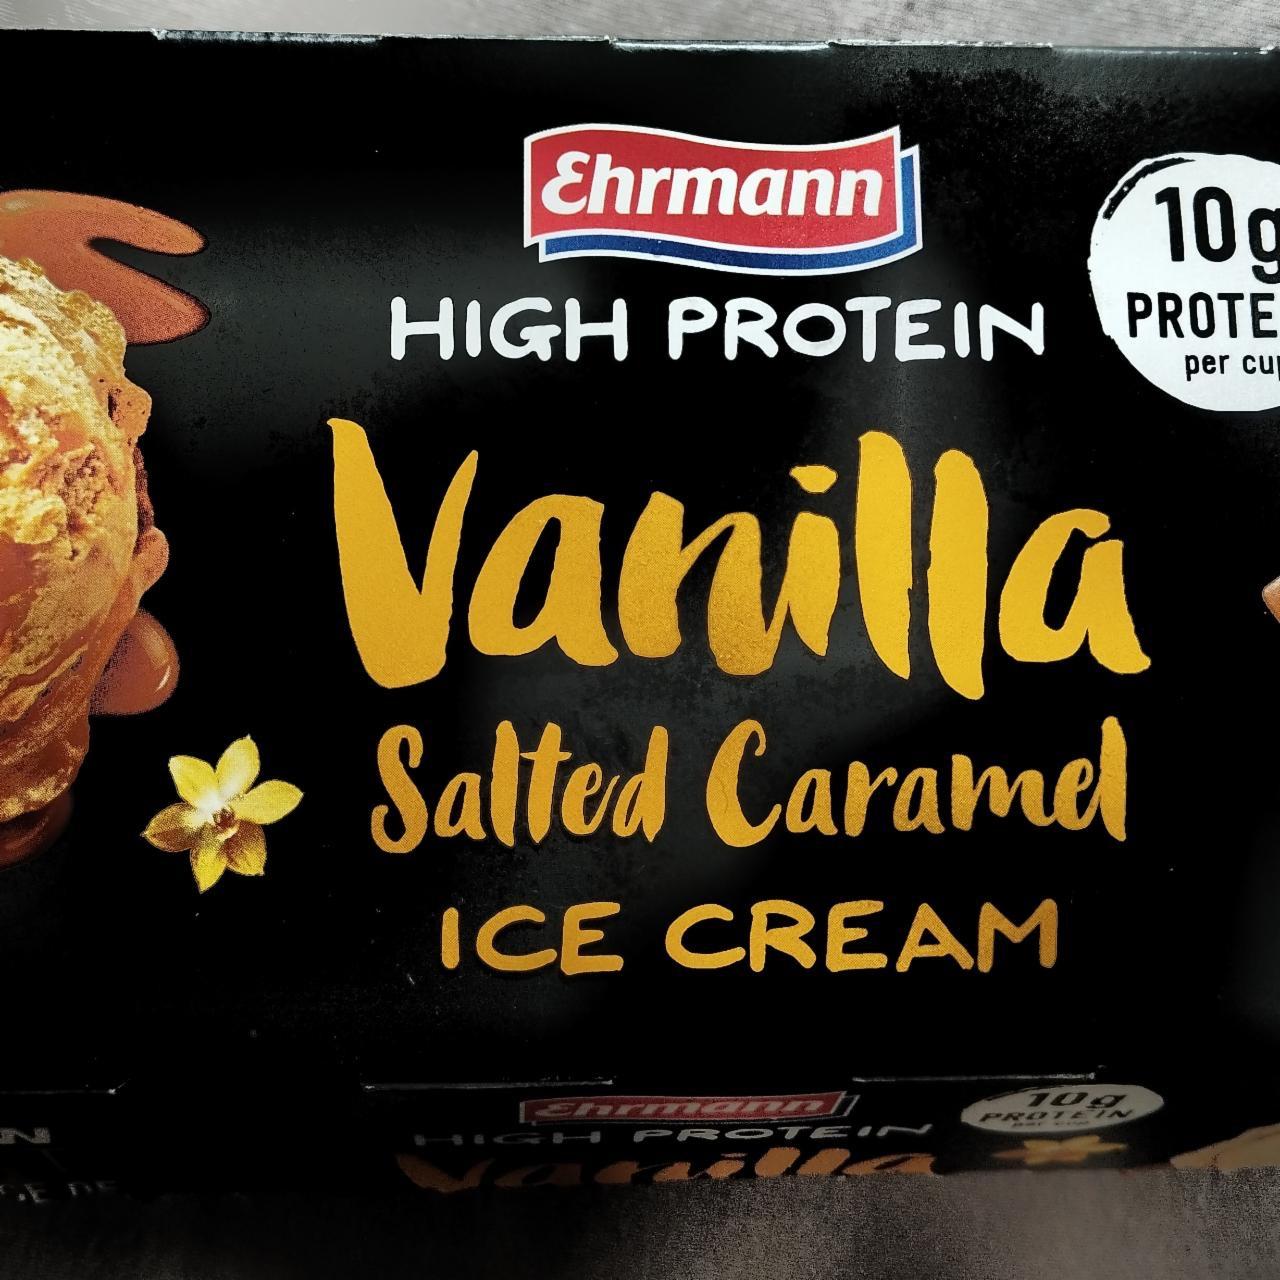 Képek - High Protein Ice Cream Vanilla Salted Caramel Ehrmann